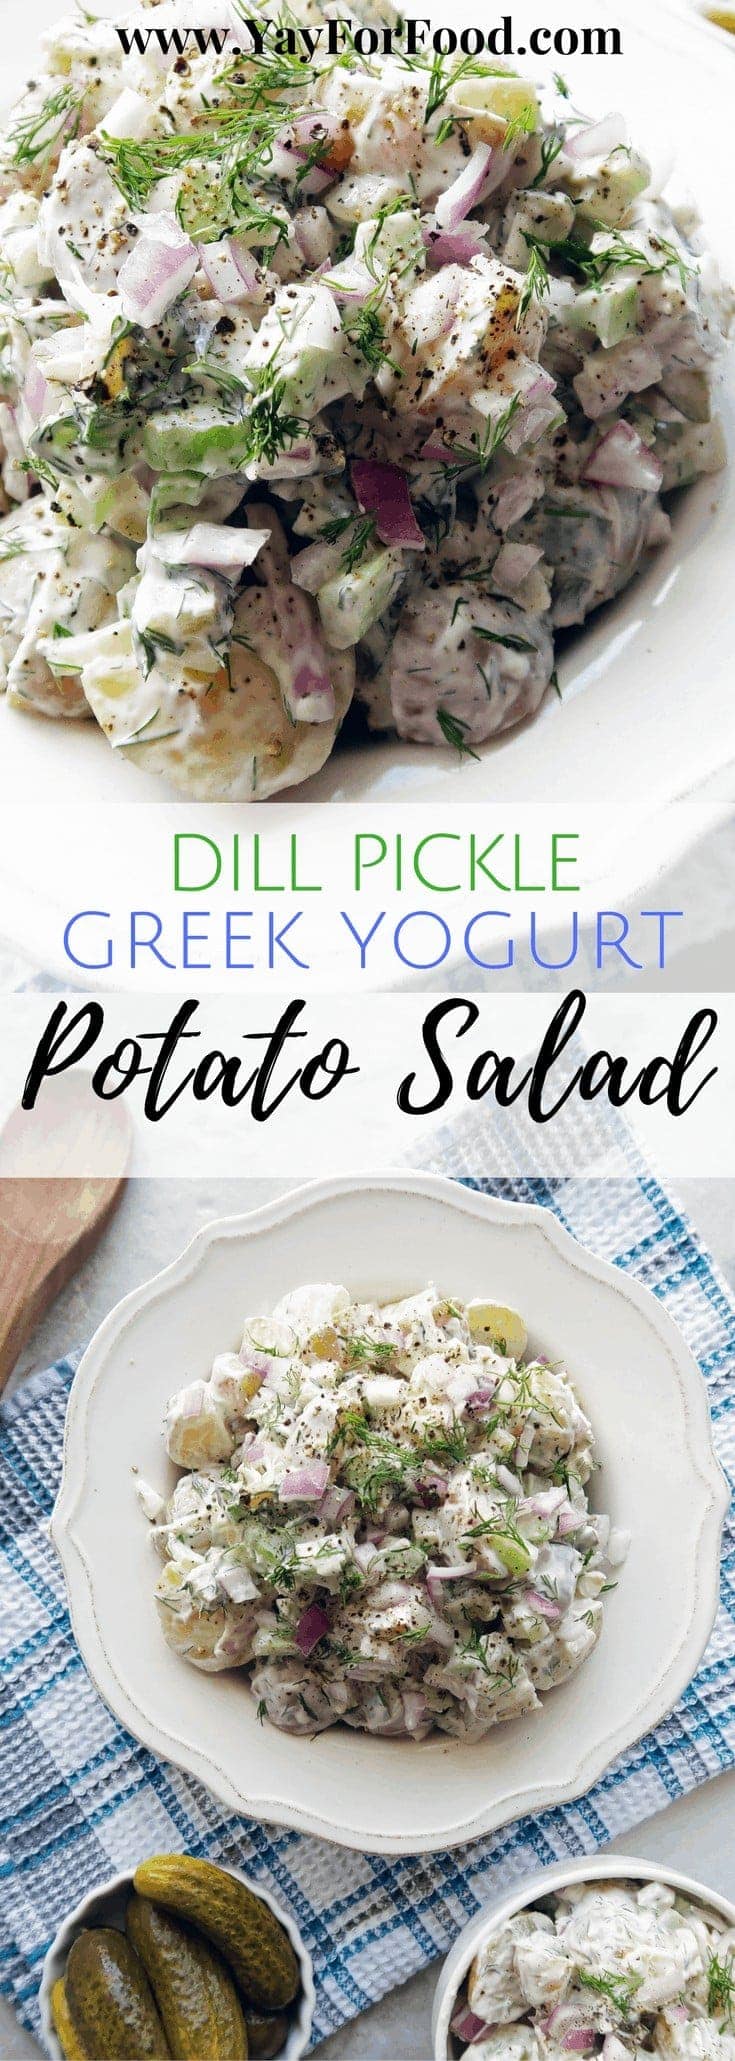 Dill Pickle Greek Yogurt Potato Salad - Yay! For Food